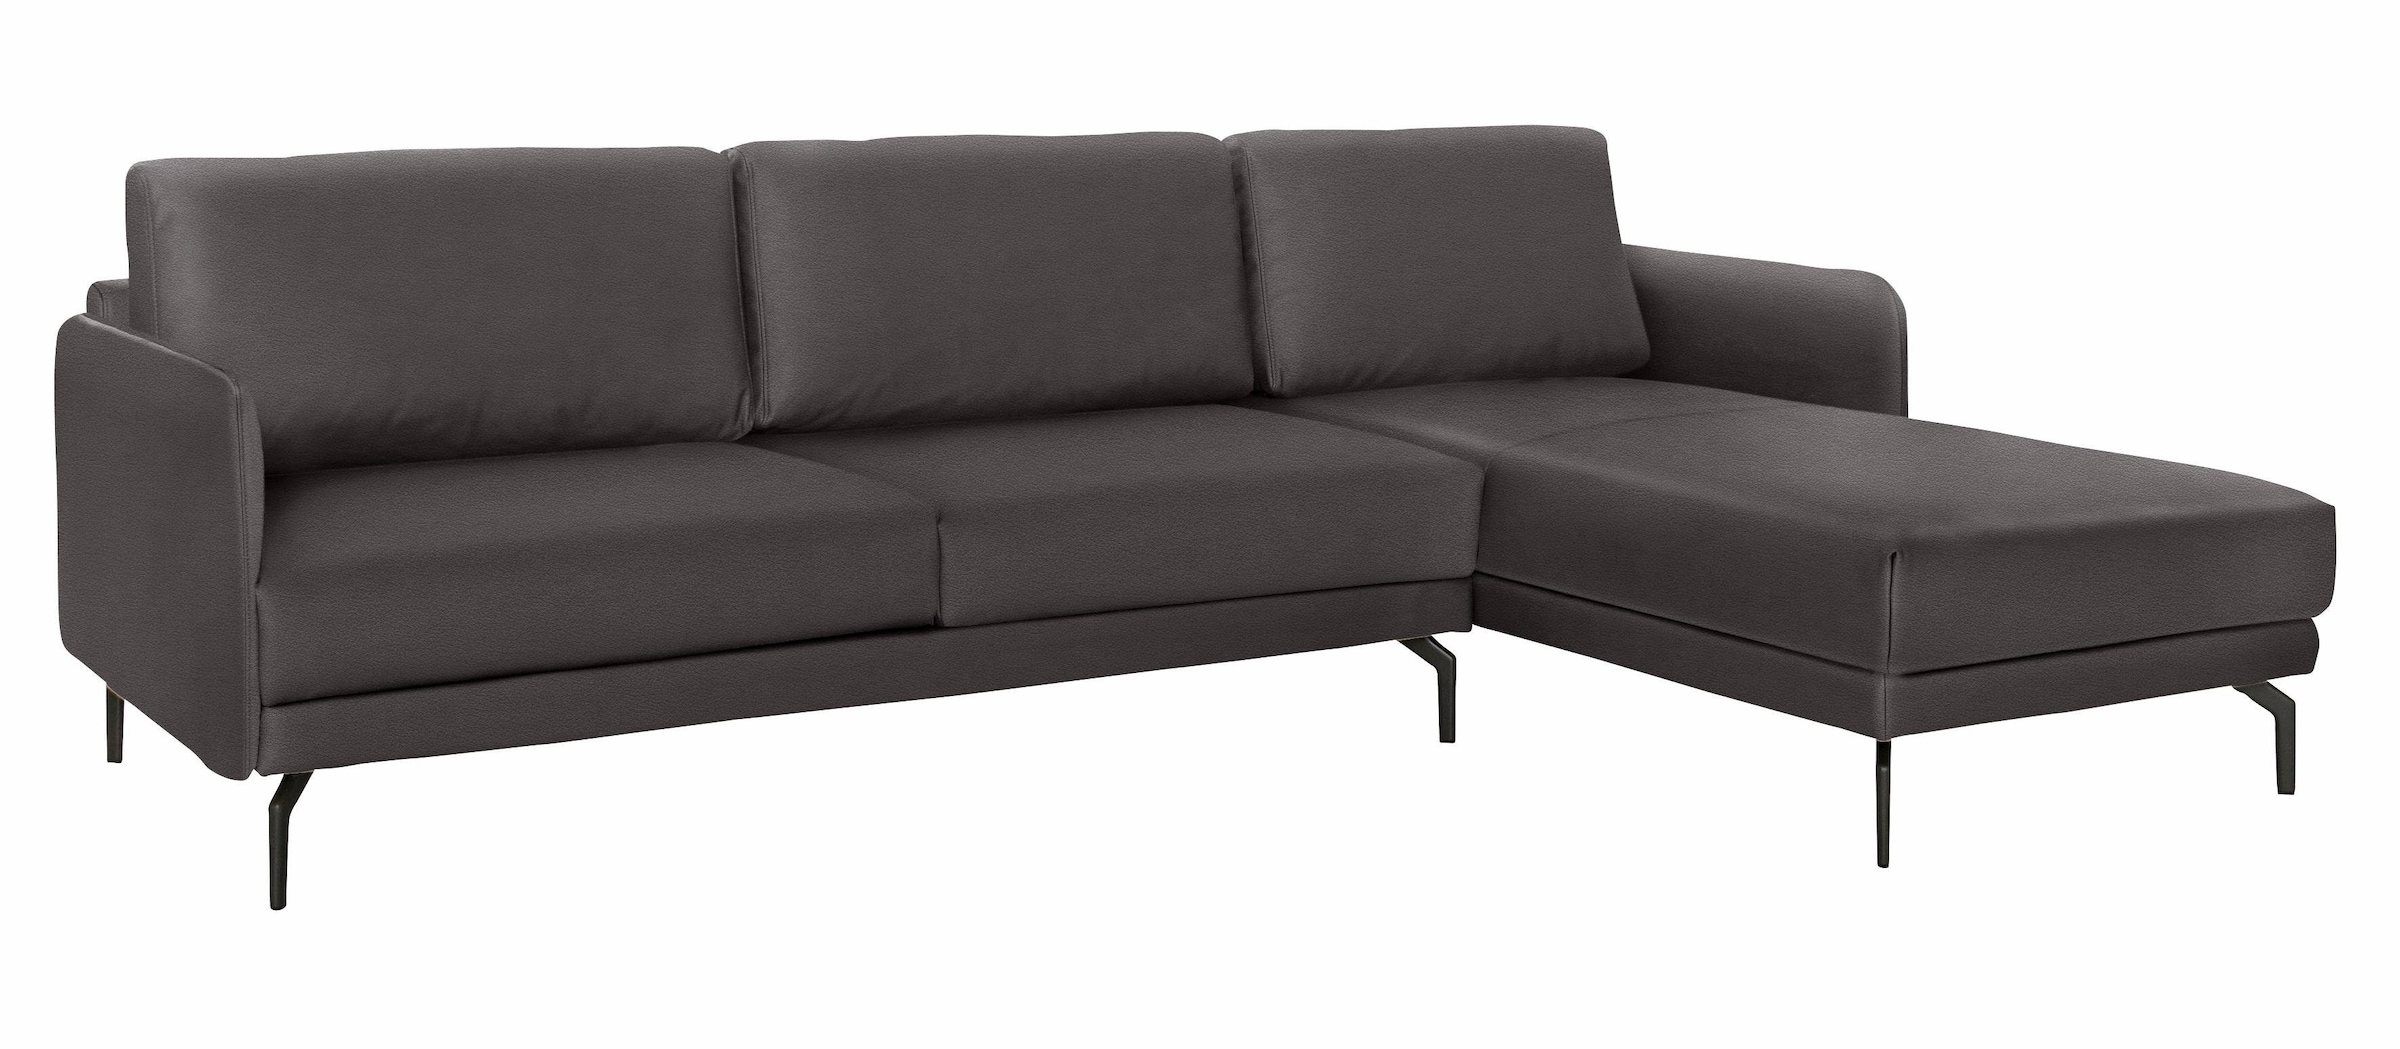 hülsta sofa Ecksofa »hs.450«, Armlehne sehr schmal, Breite 234 cm, Alugussfüße in umbragrau